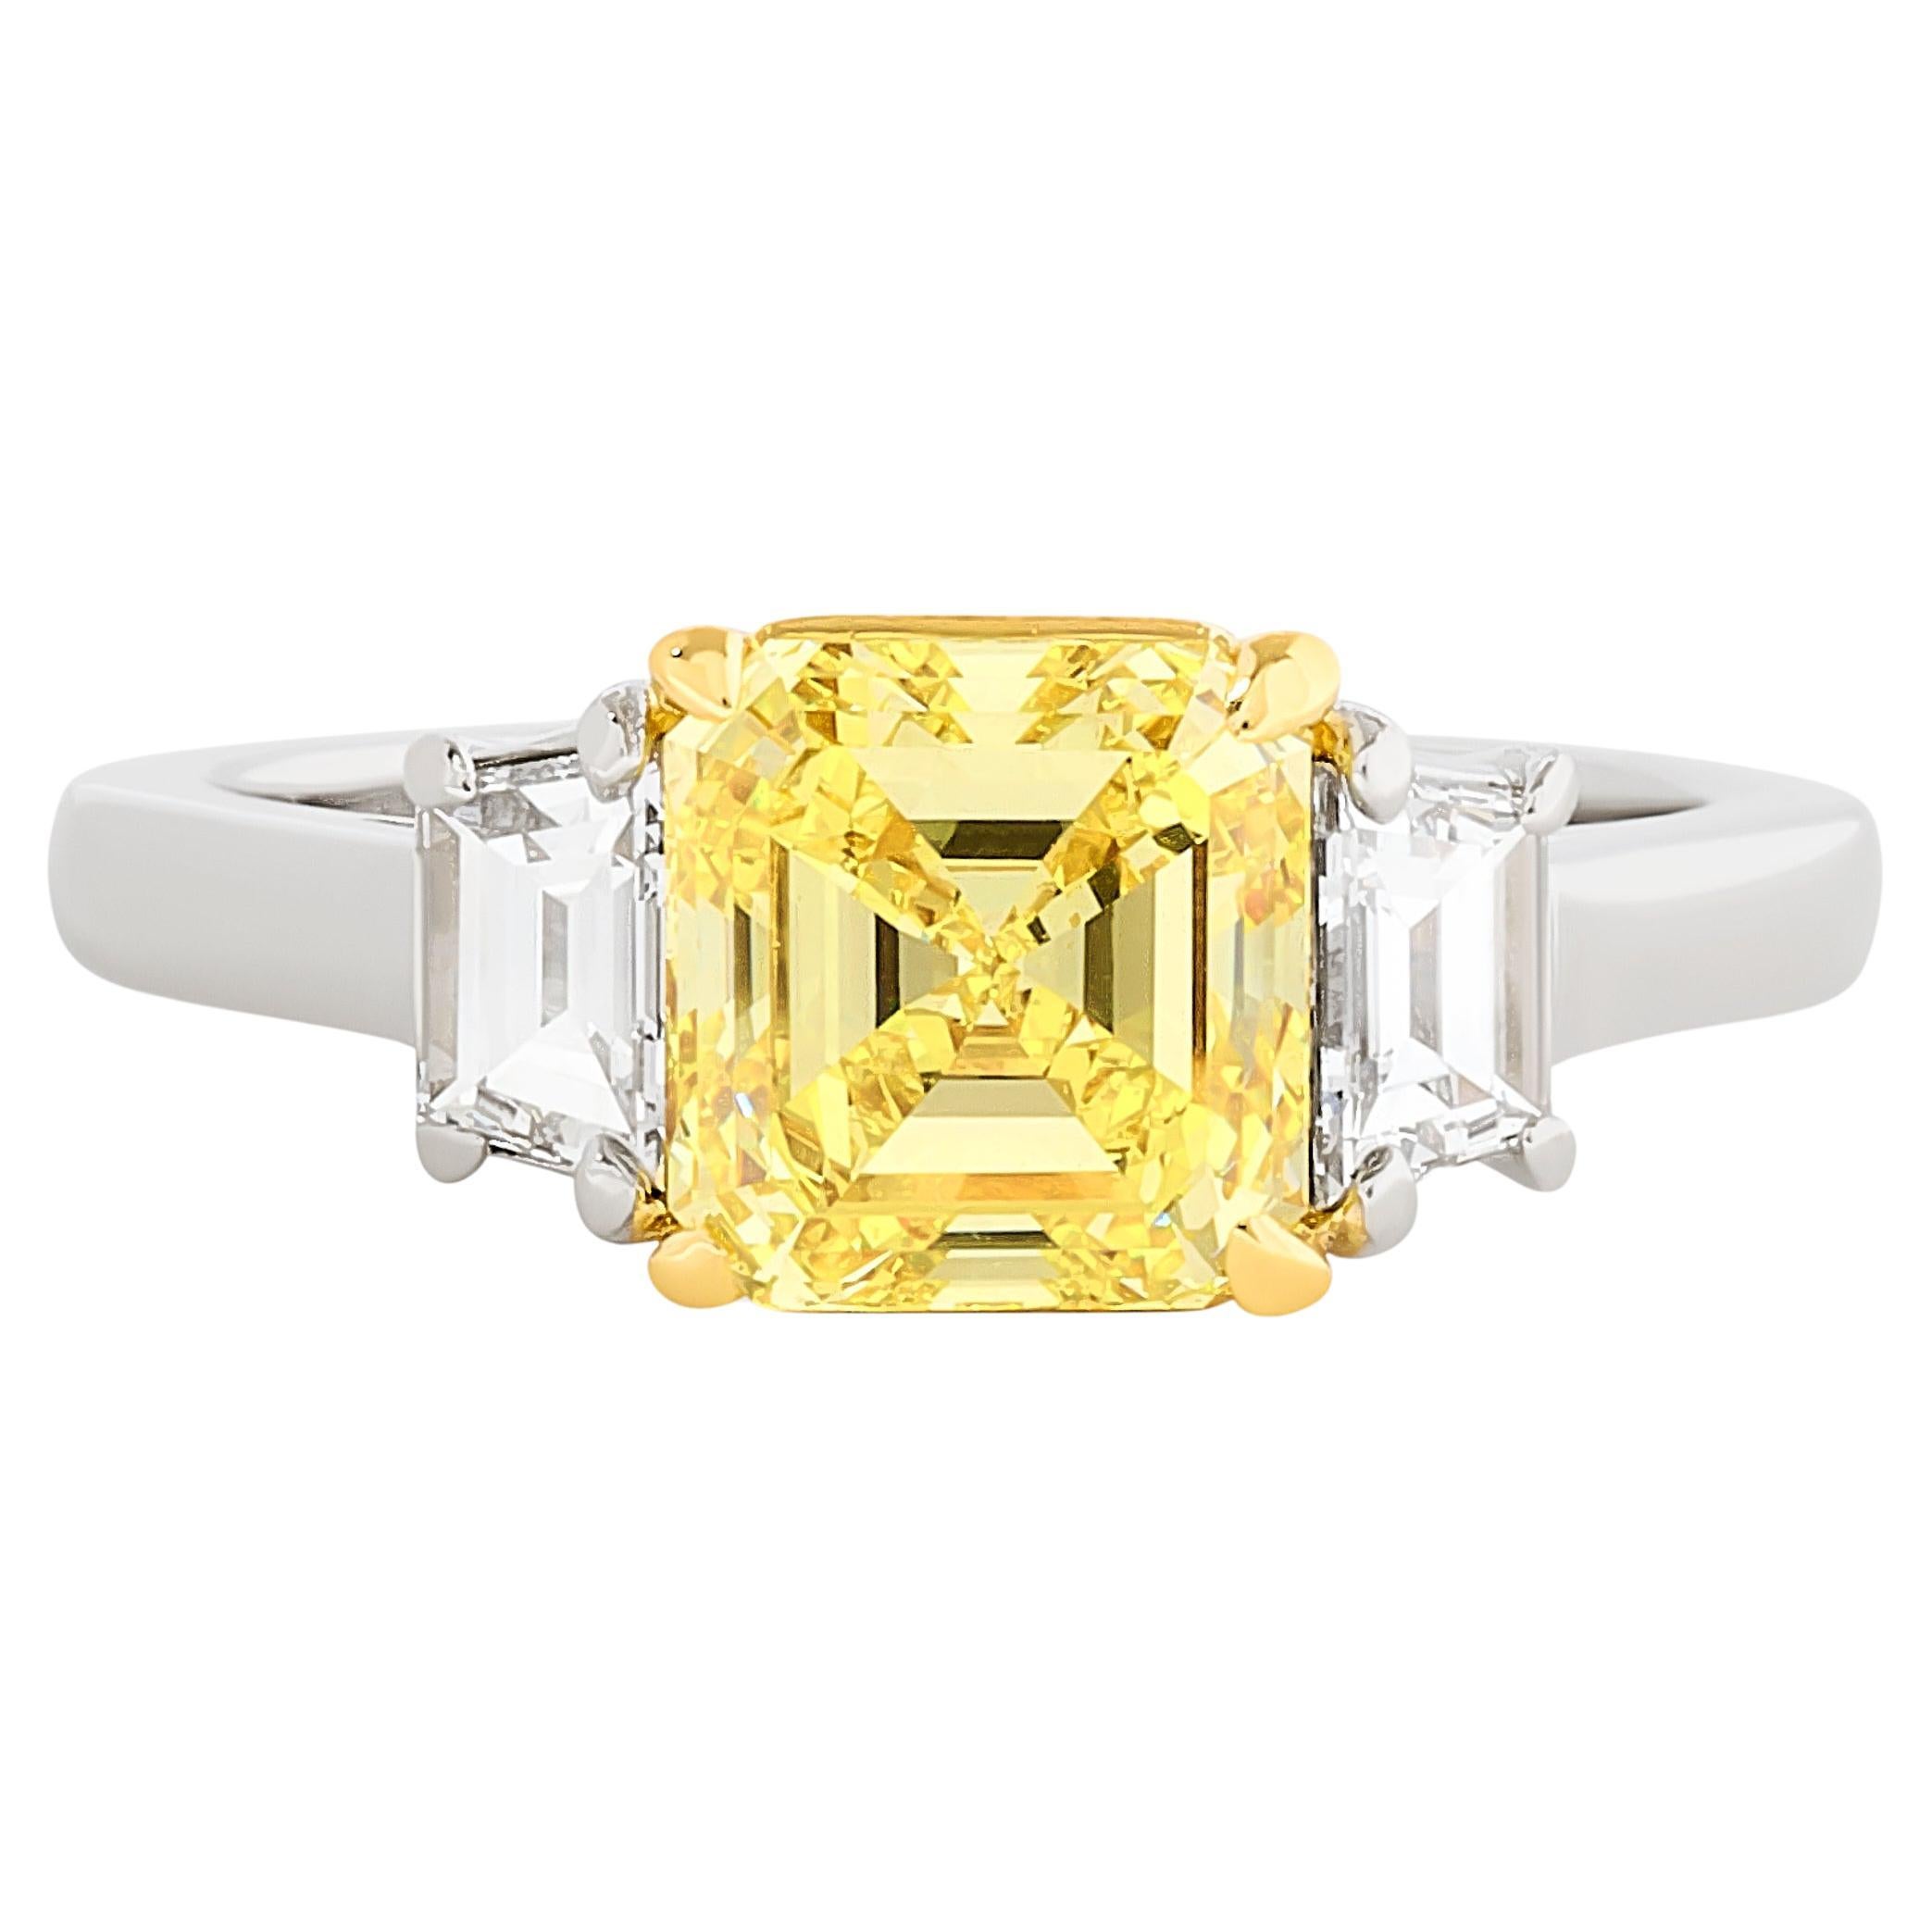 Cartier Yellow Square Emerald Cut Diamond 3 Stone Ring in PLAT/18K Yellow Gold